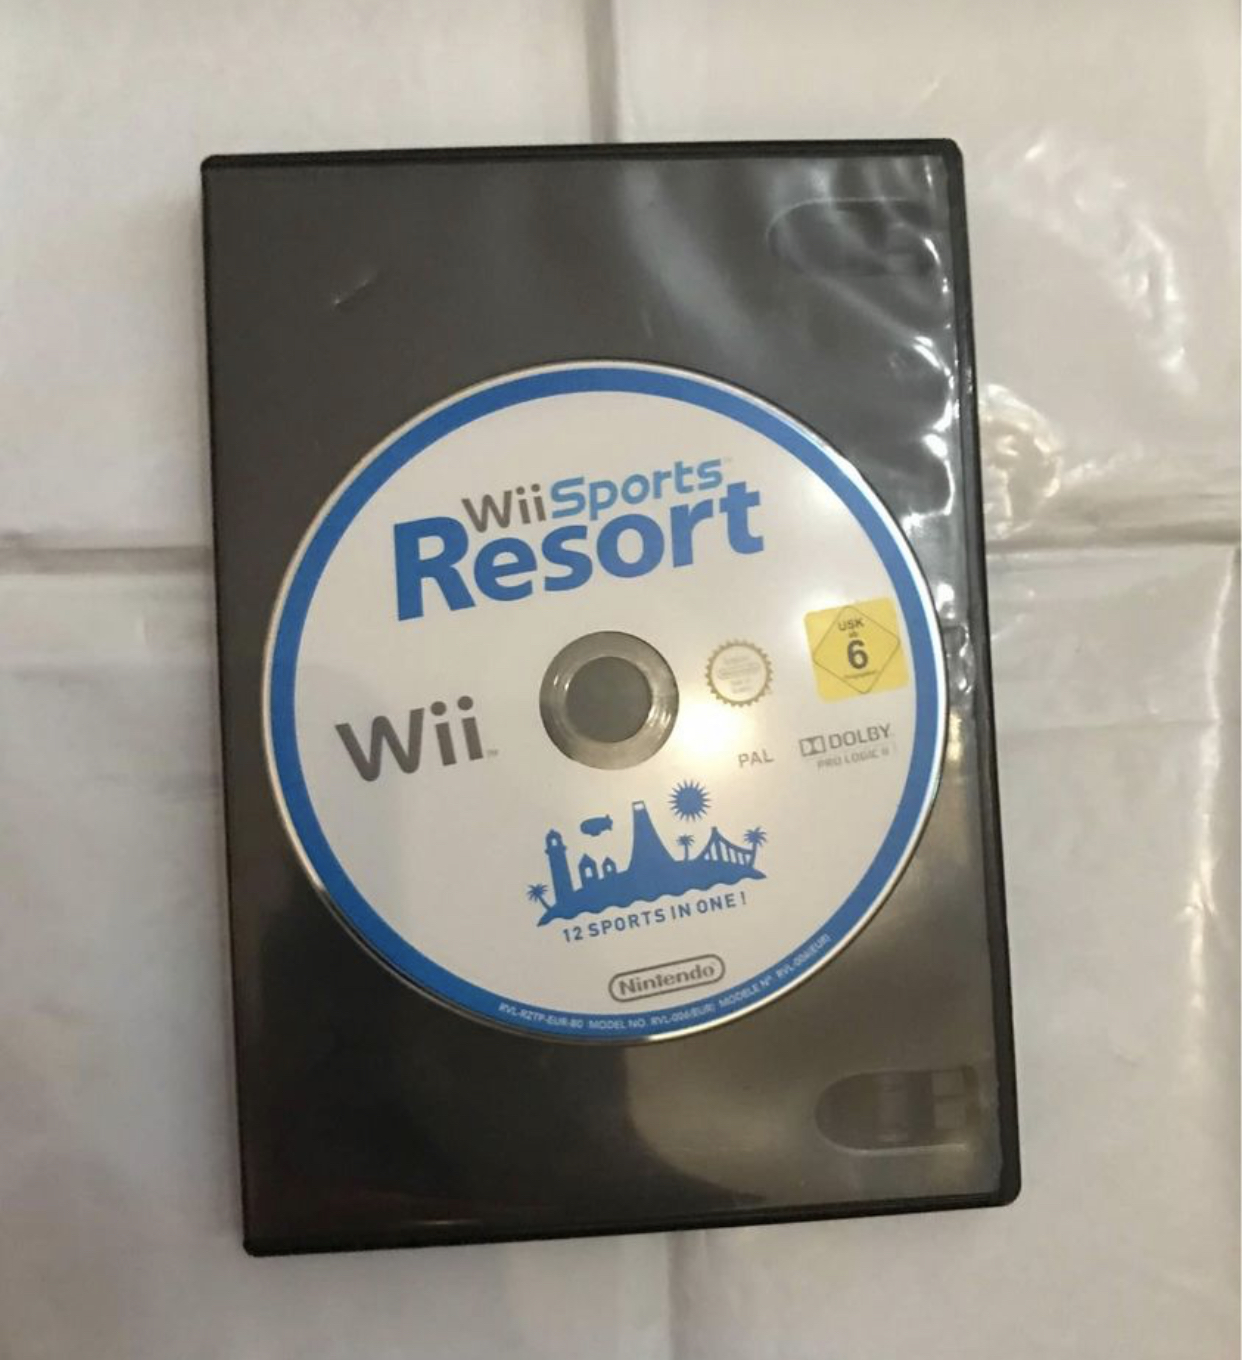 Wii sports resort game